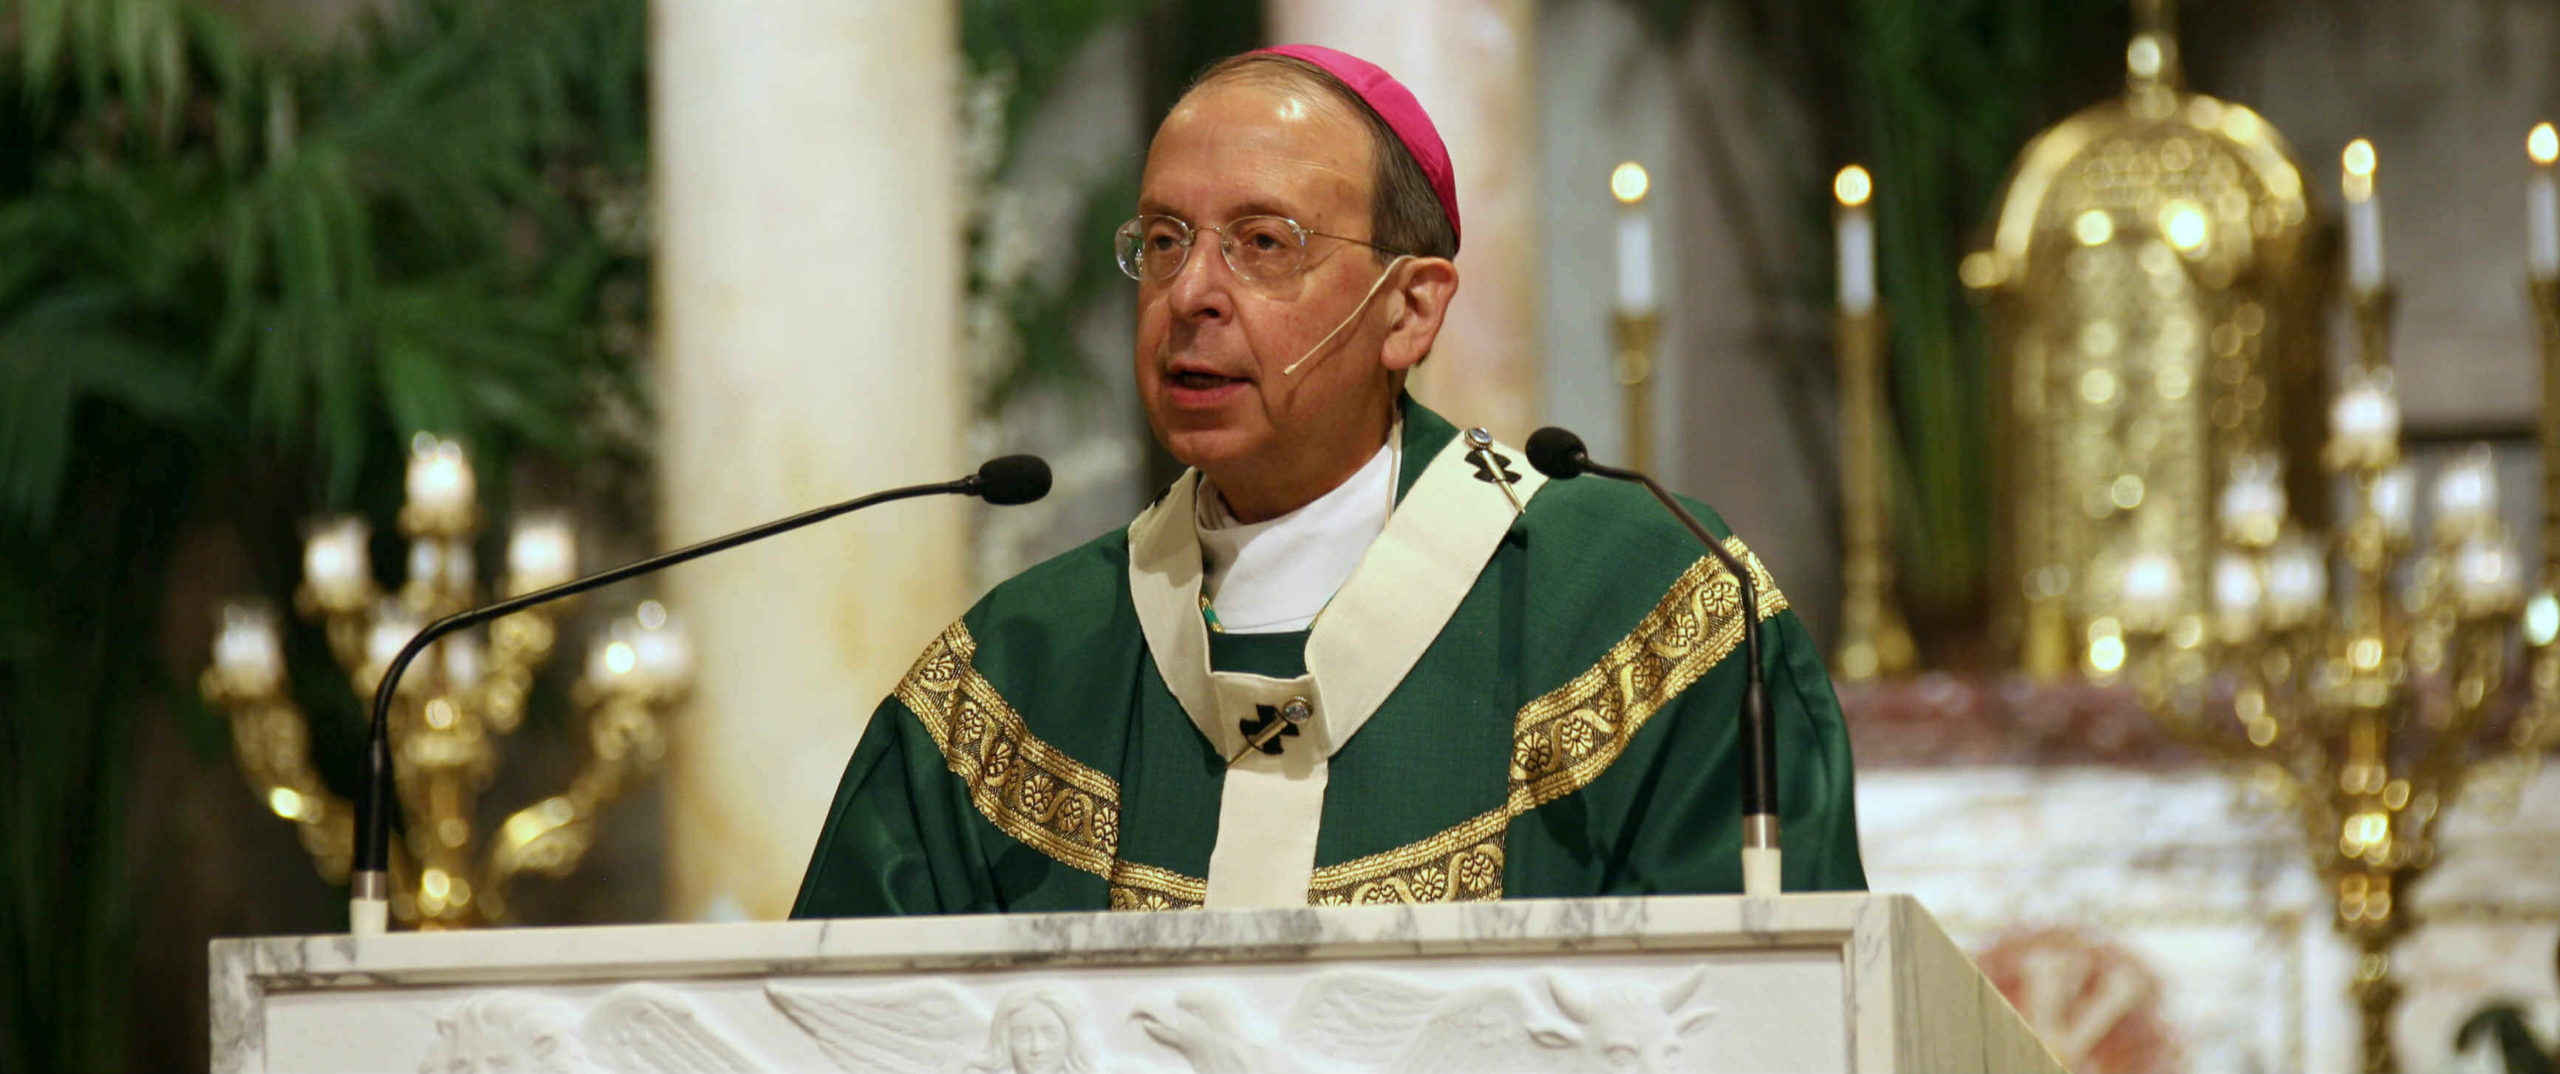 Archbishop Lori addresses preliminary report on Bishop Michael Bransfield